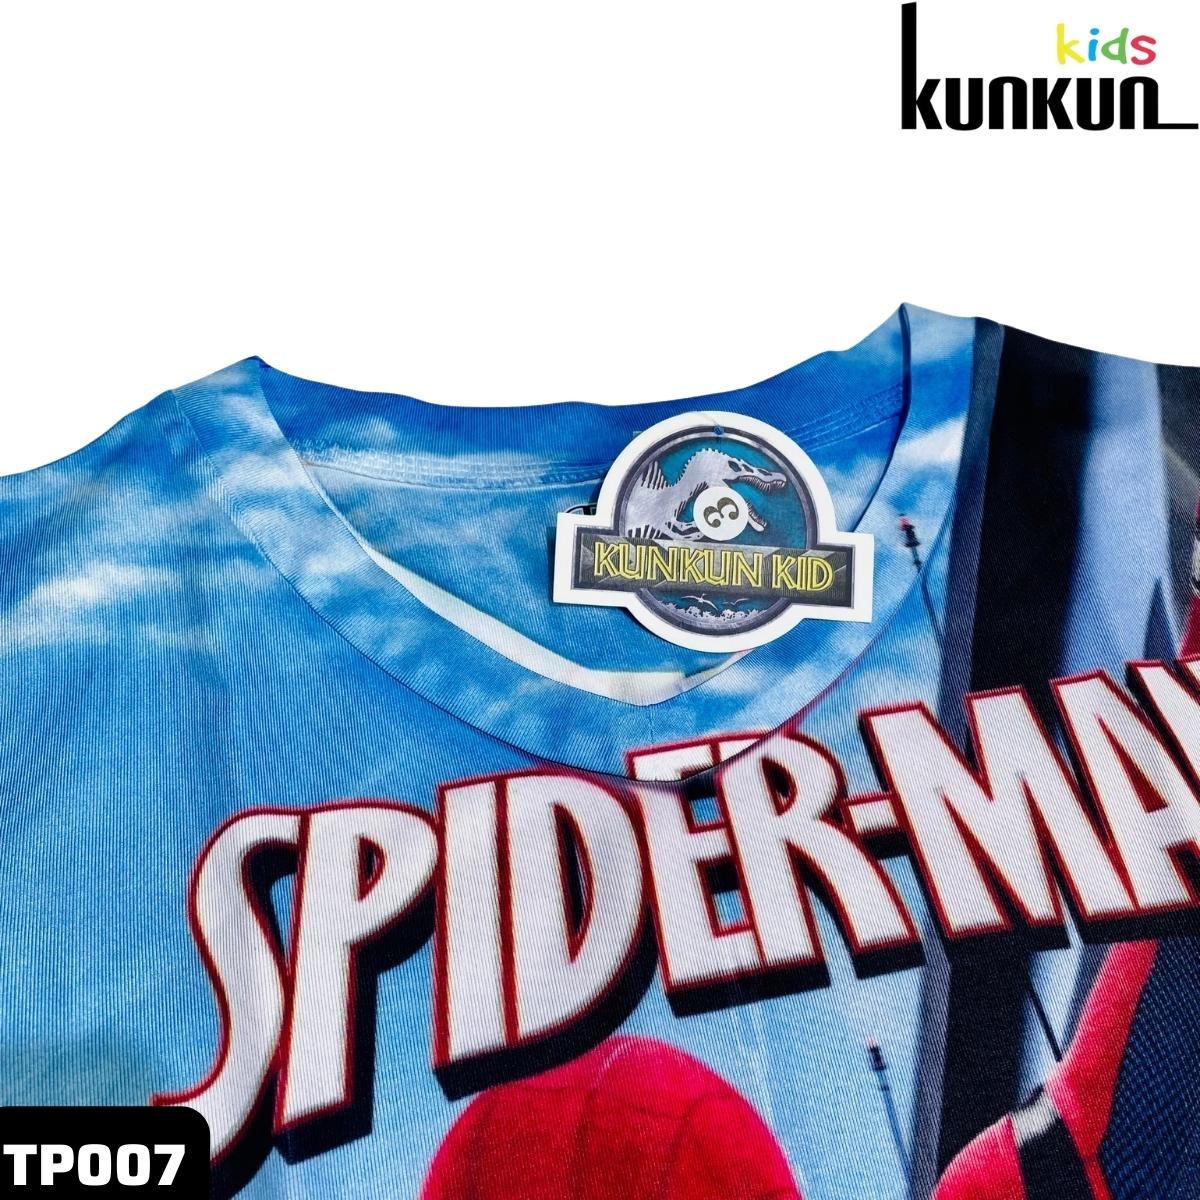 Đồ Bộ Bé Trai Hình Spider Man In 3D 09  (Size